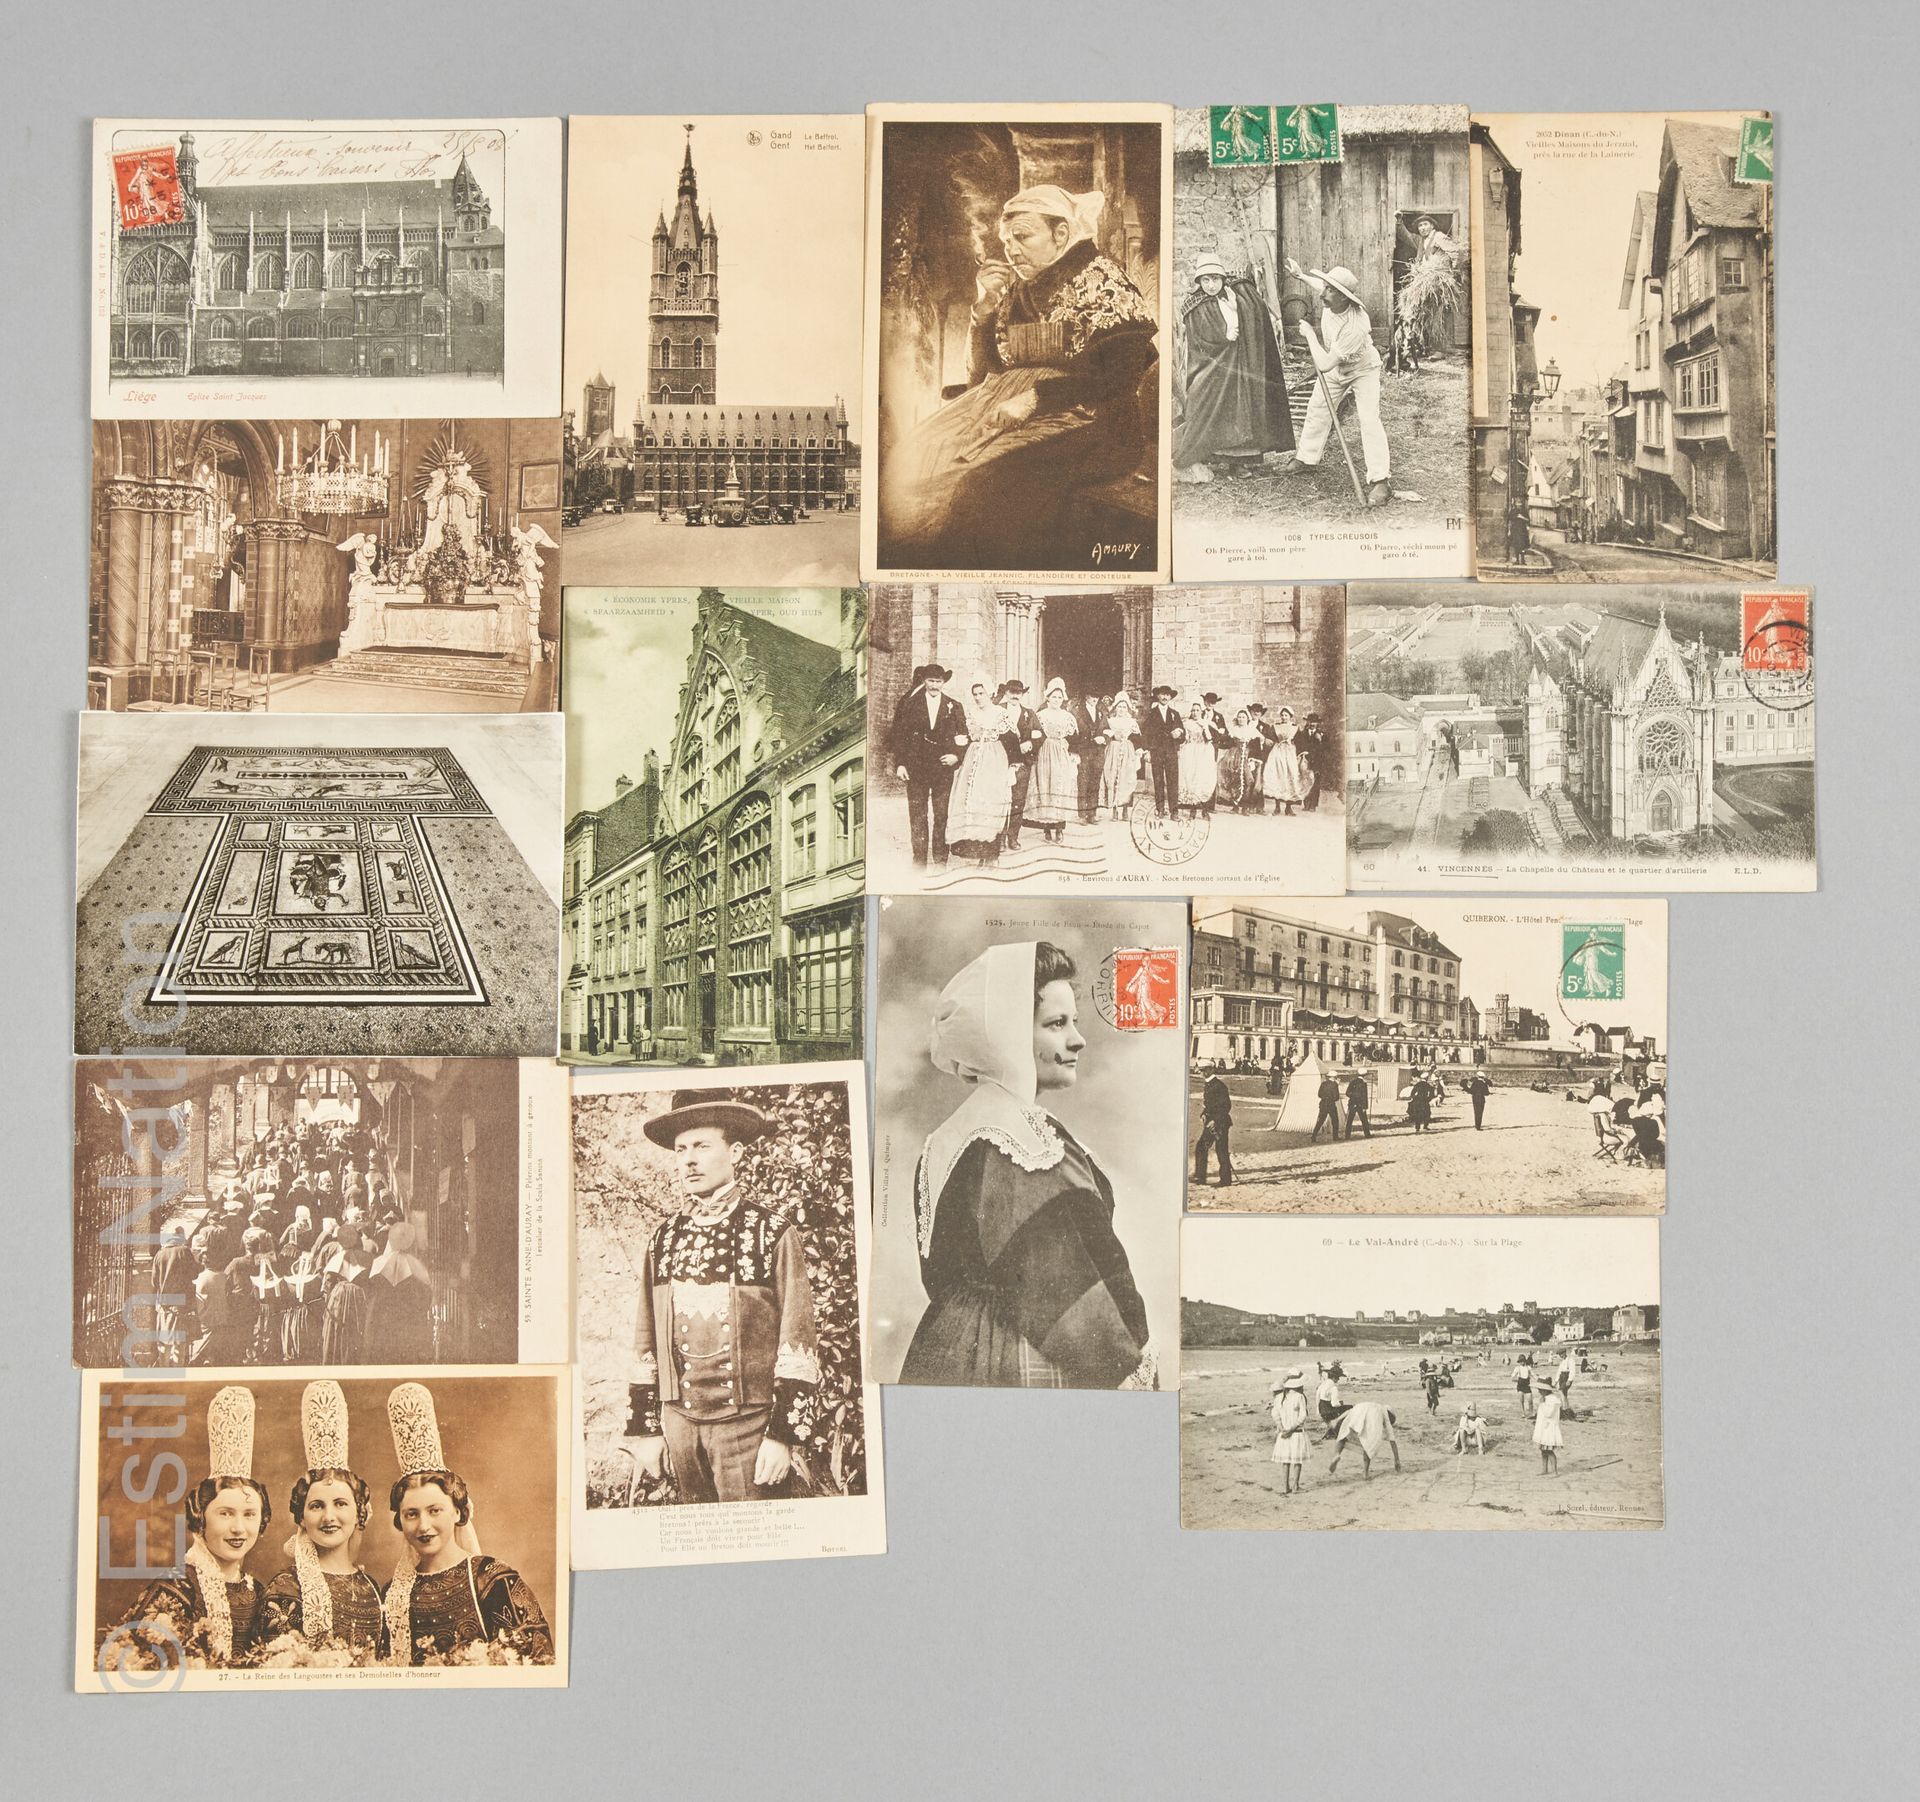 CARTES POSTALES 以法国、欧洲（意大利、拉文纳、摩纳哥、吕贝克、罗马、德国、比利时）各地区和传统地区服装为主题的约500张明信片的重聚。

从19&hellip;